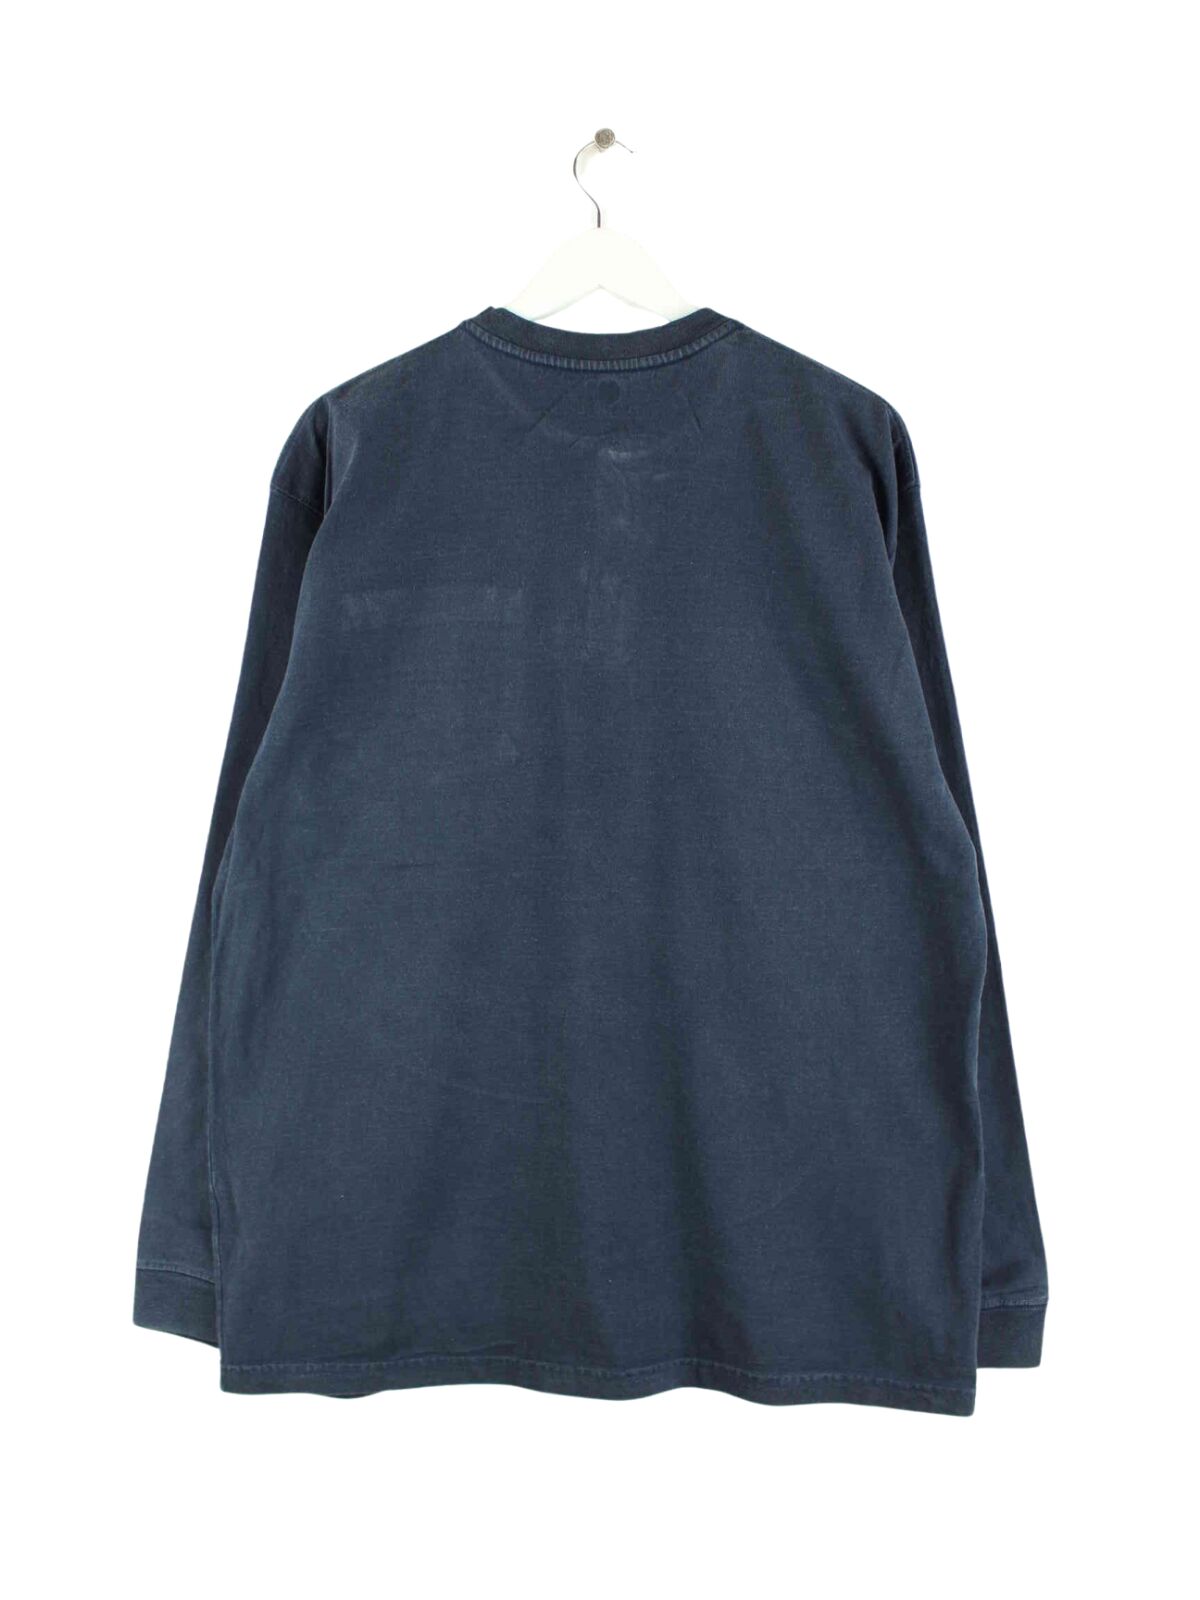 Carhartt Basic Sweatshirt Blau L (back image)